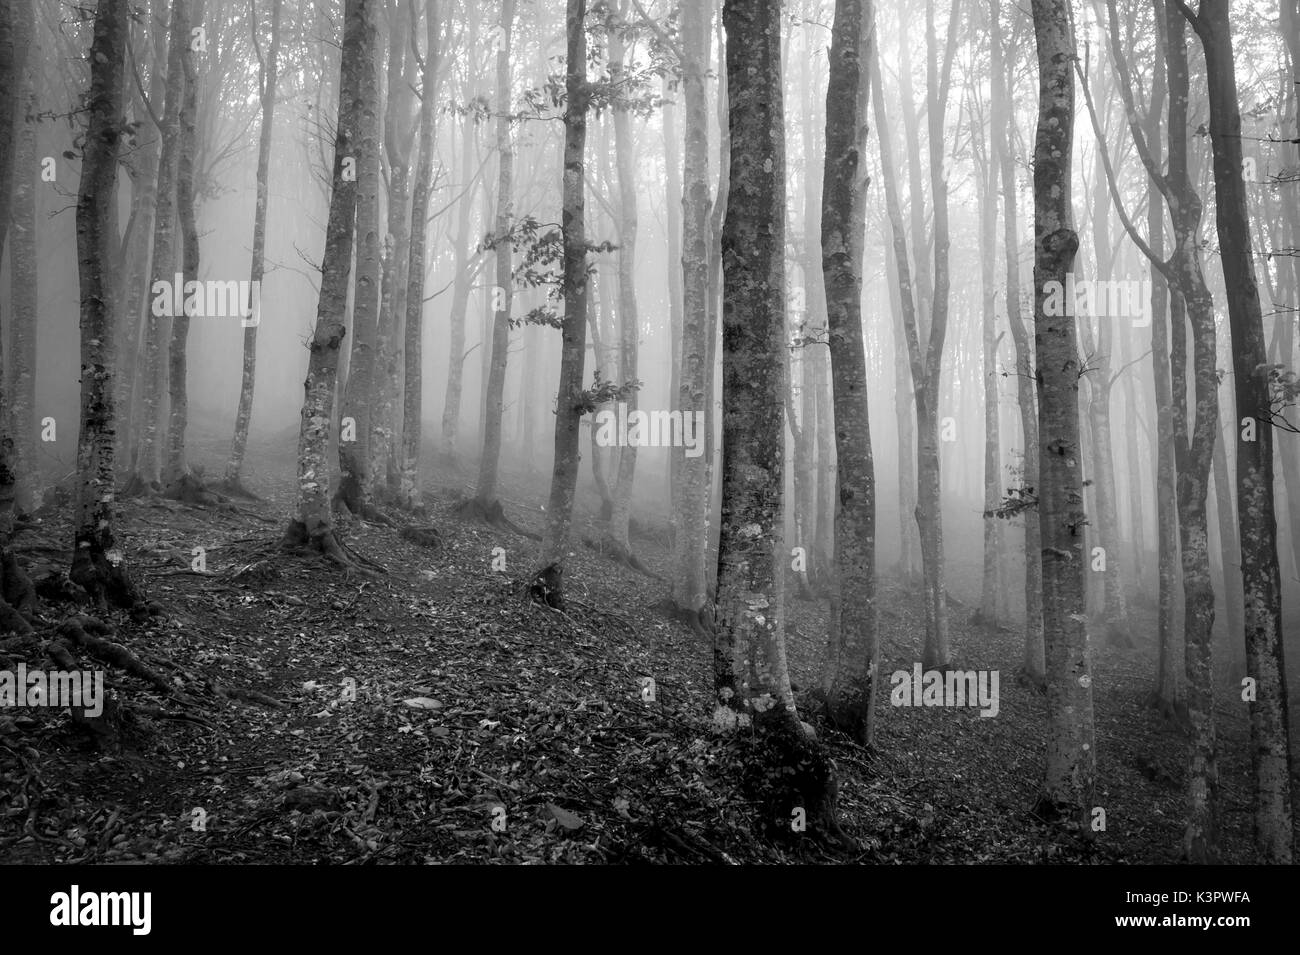 Sassofratino Reserve, Foreste Casentinesi National Park, Badia Prataglia, Tuscany, Italy. Mist in the forest. Stock Photo